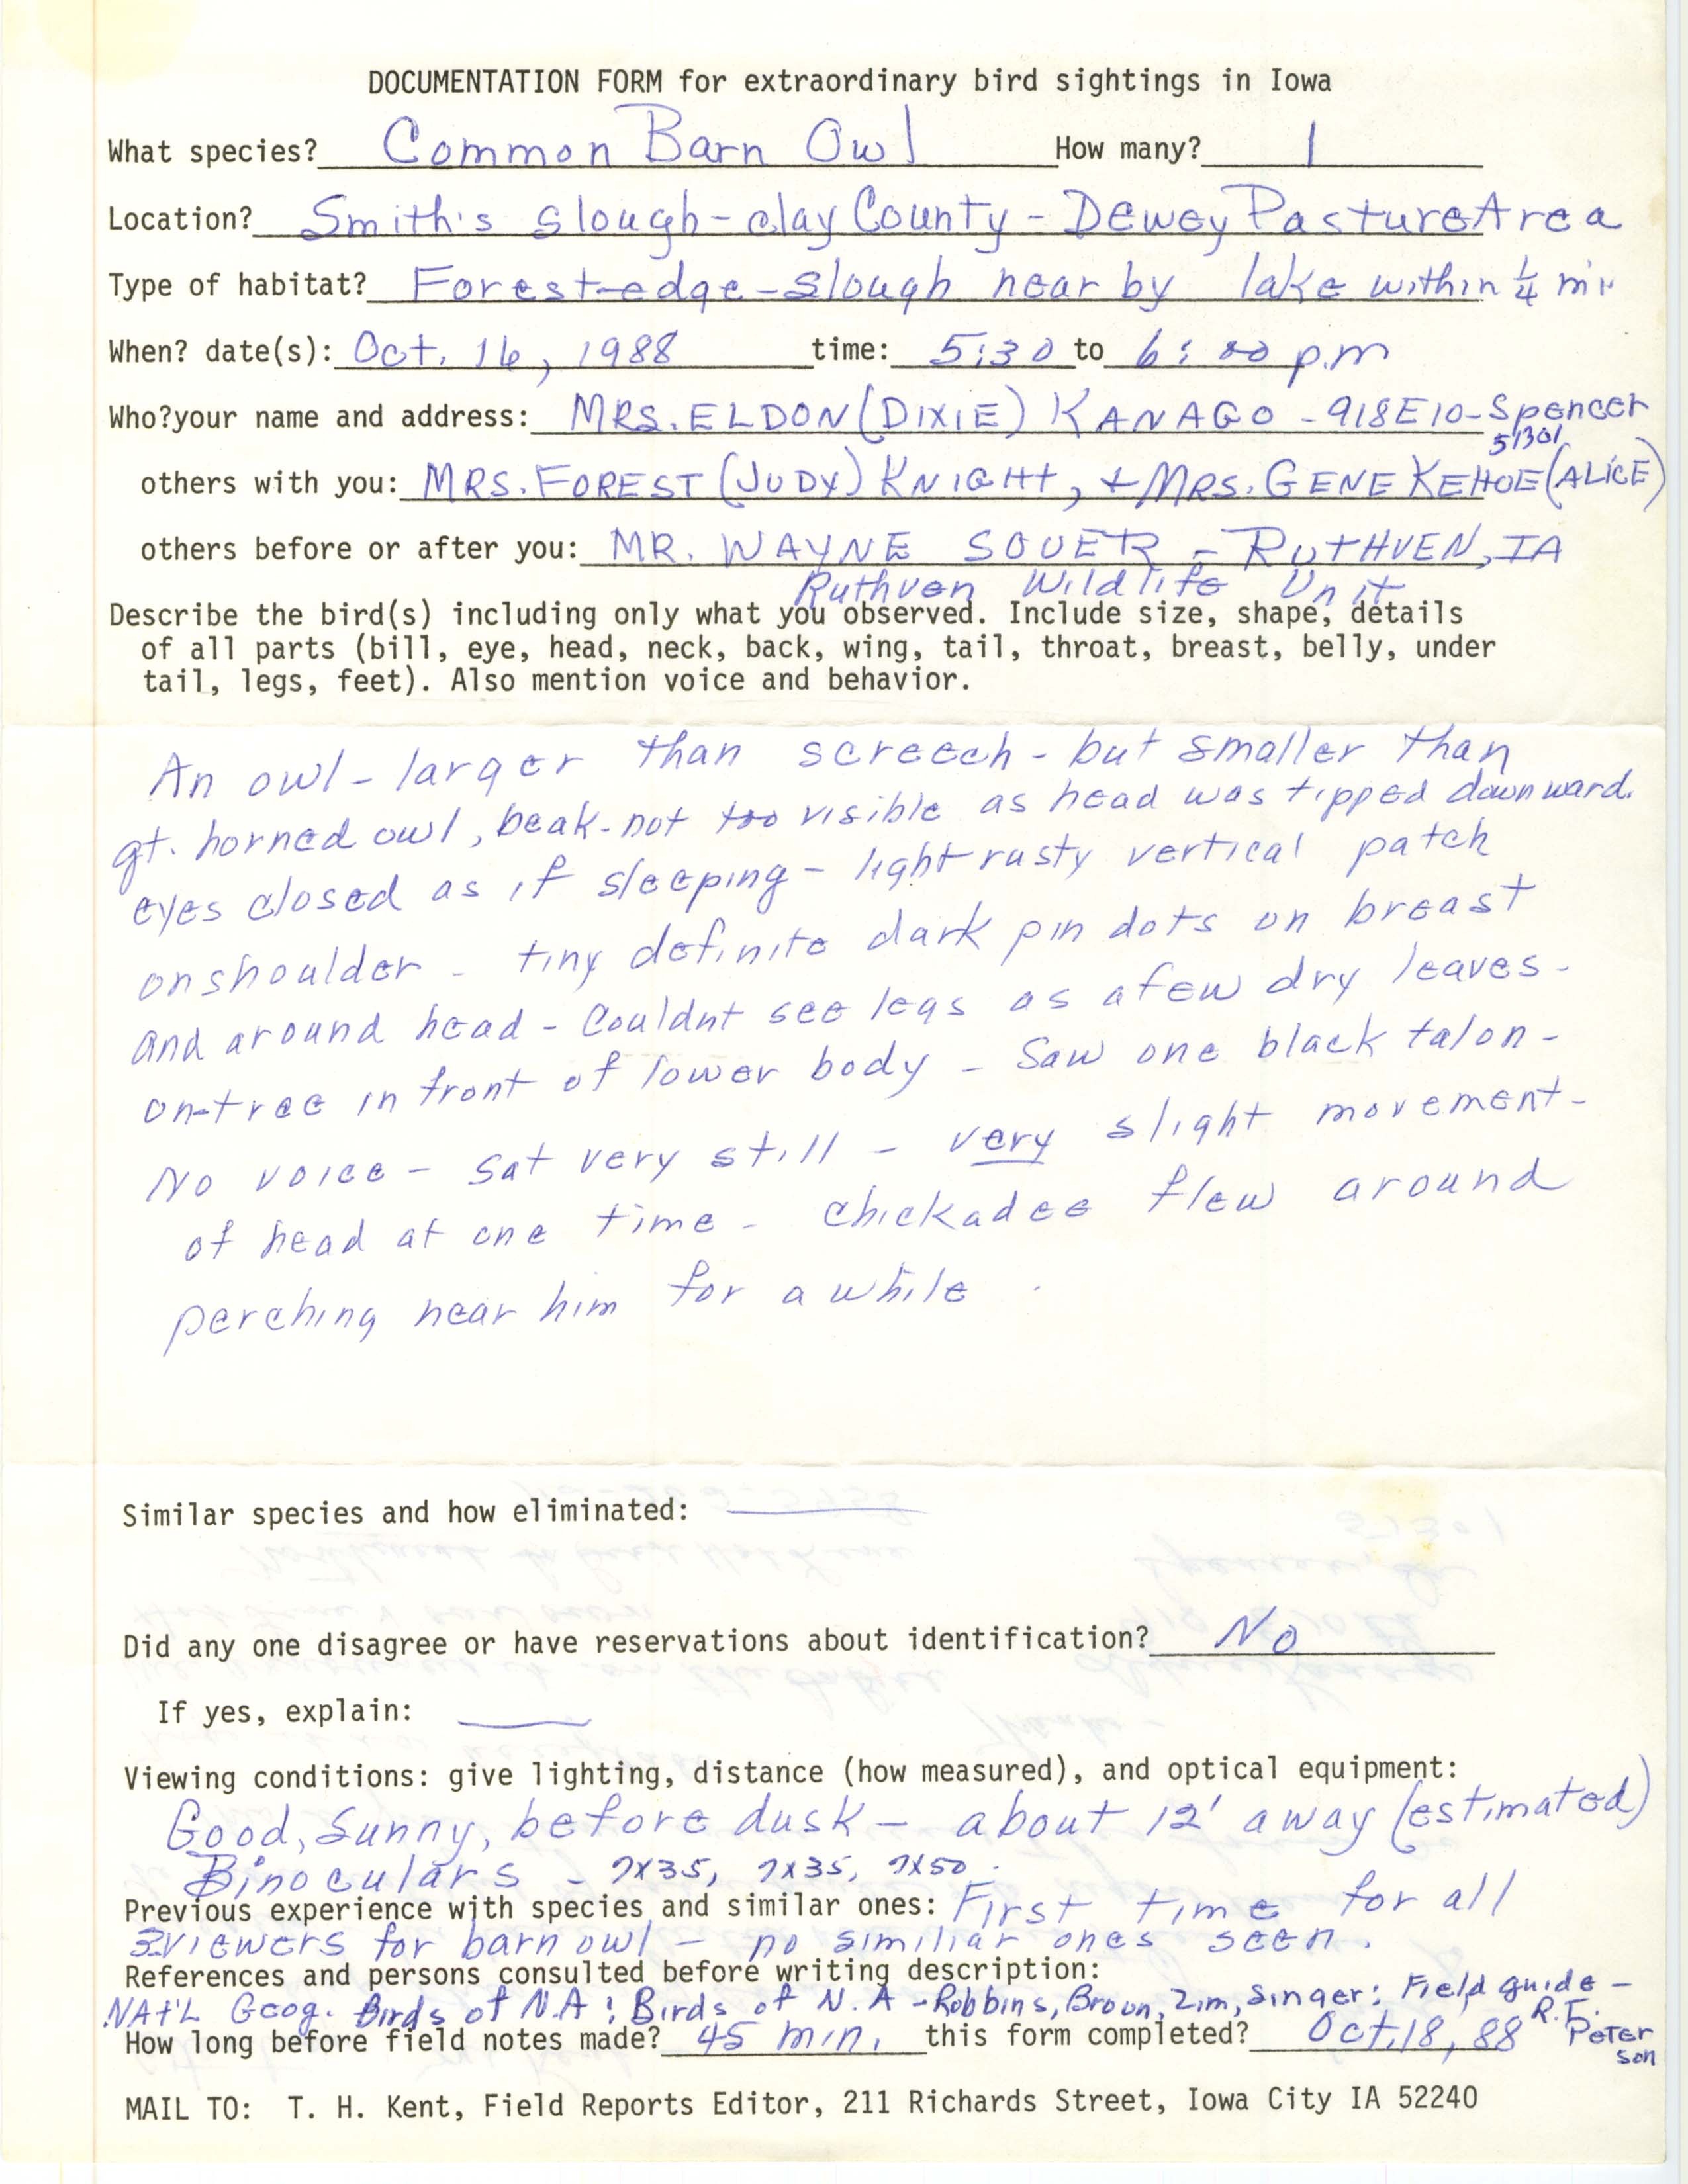 Rare bird documentation form for Common Barn Owl at Smith's Slough, 1988